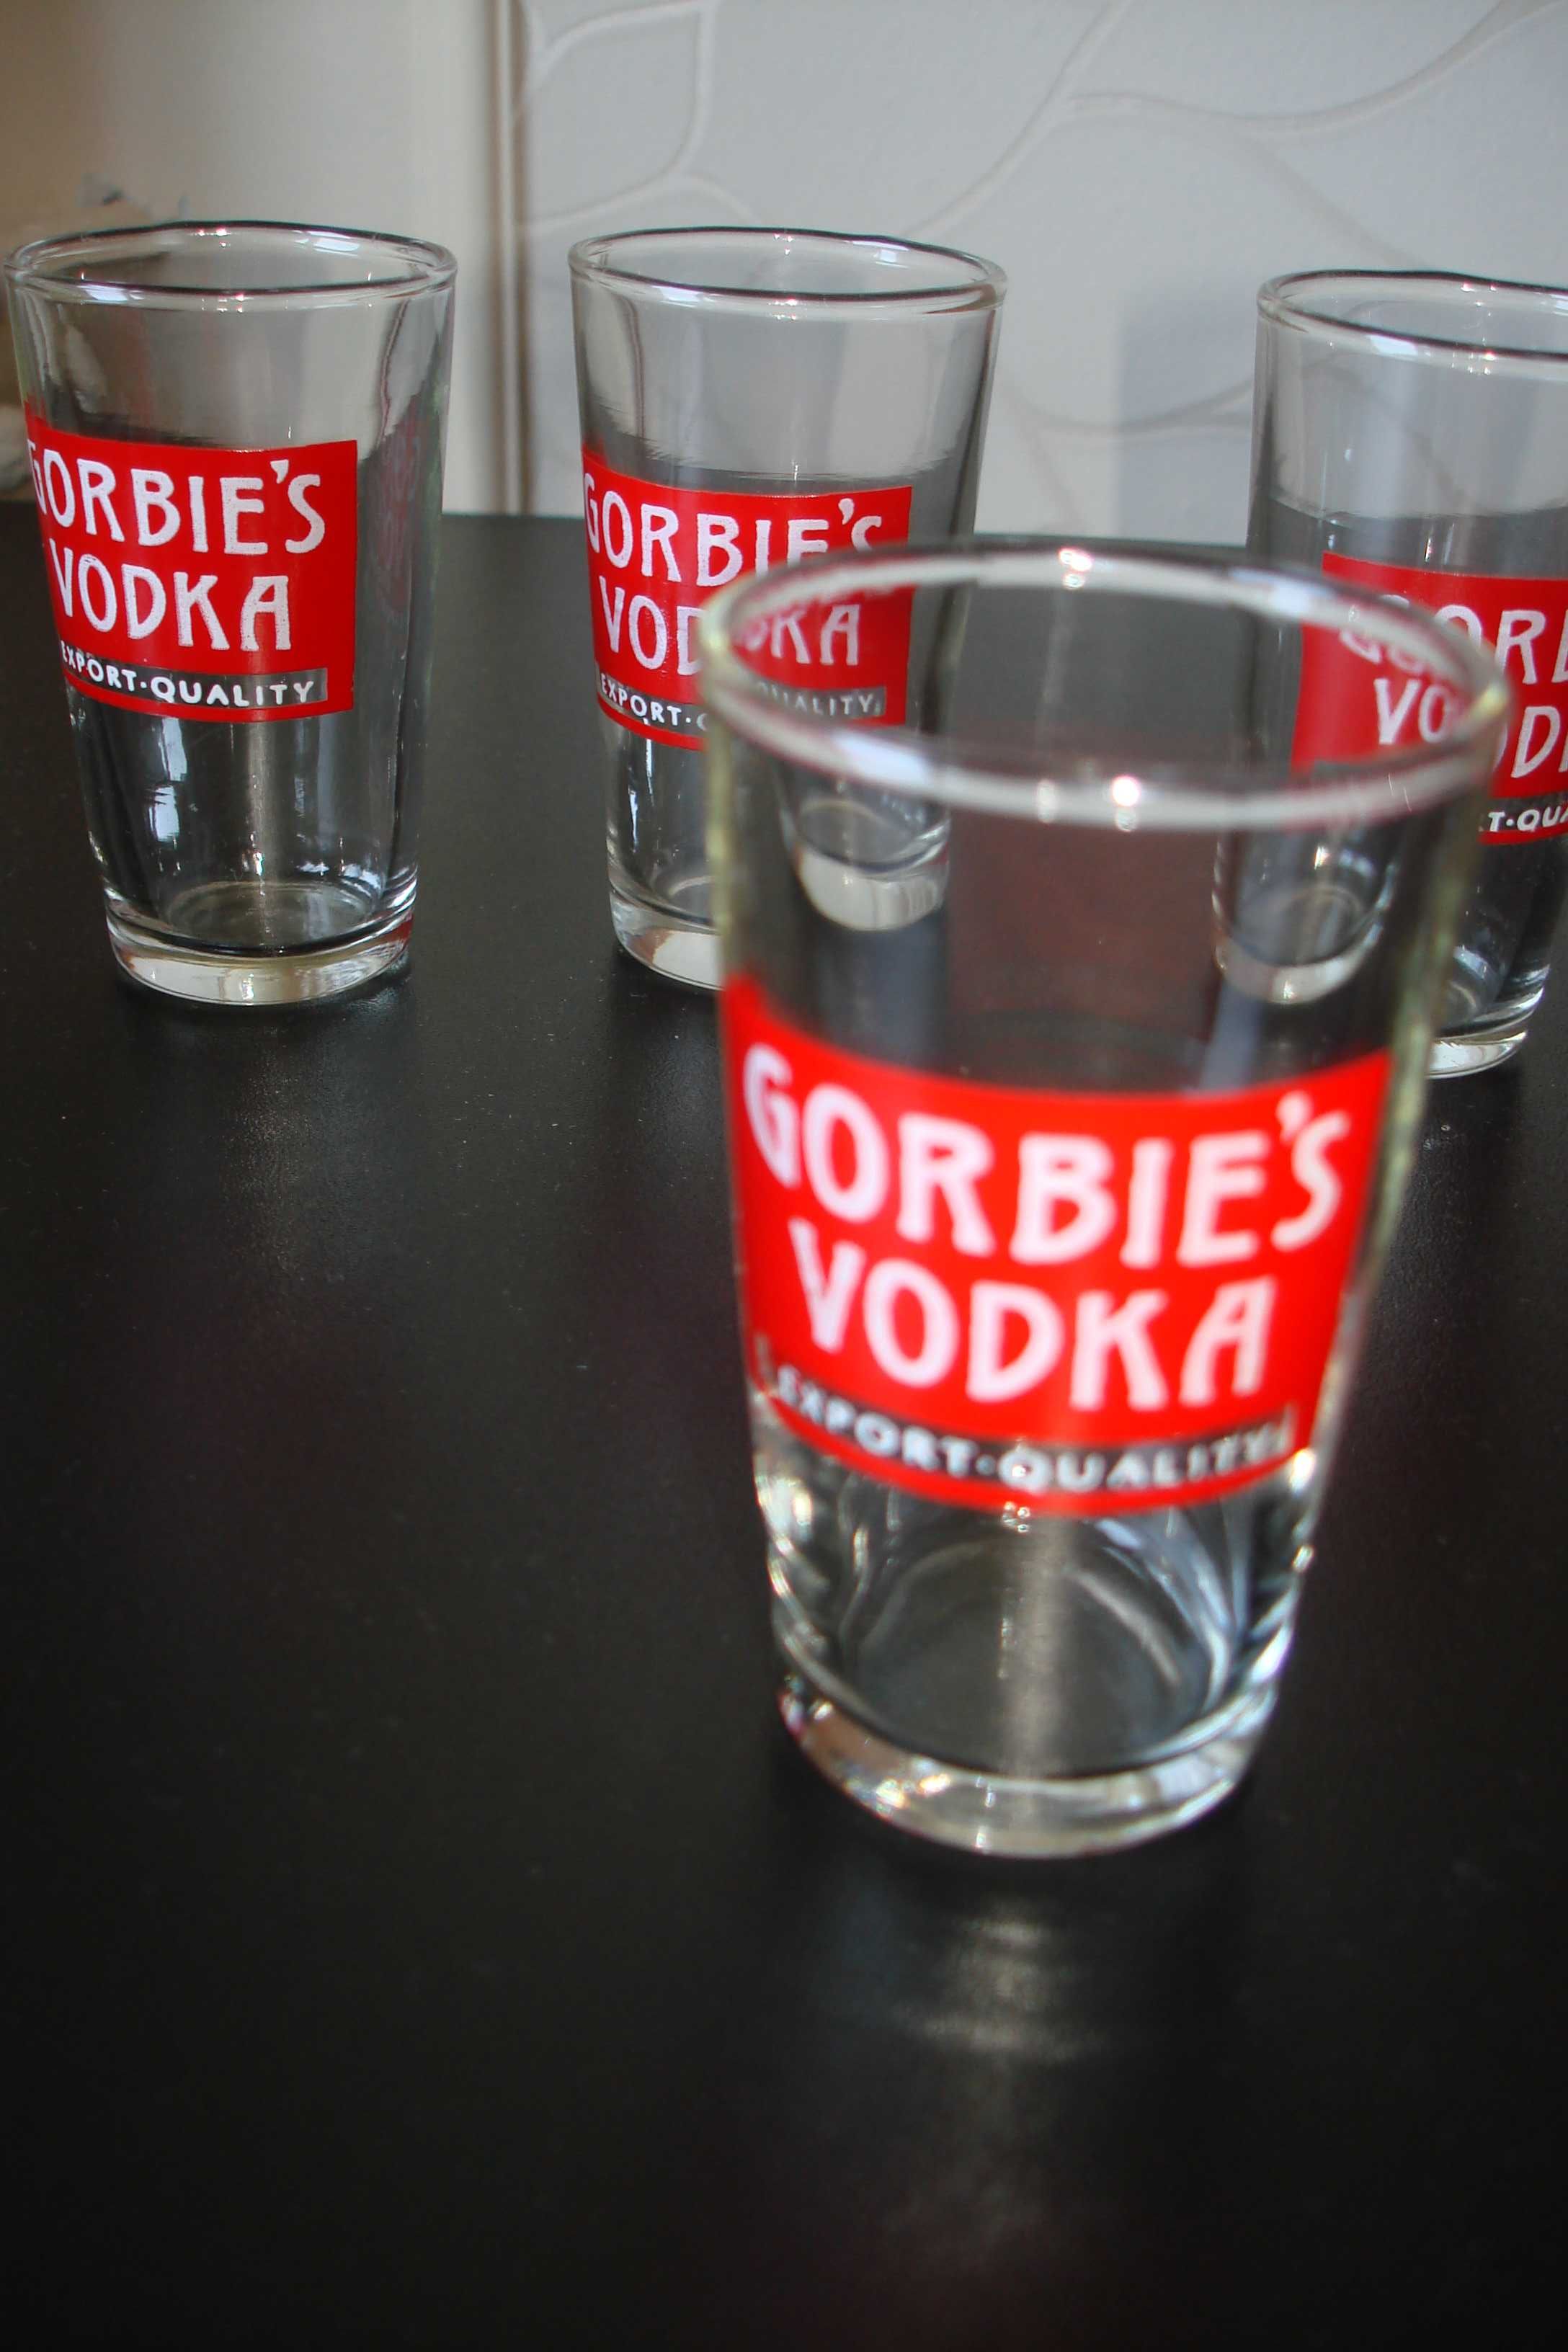 Pahare tuica-vodca Gorbie s vodka- 6 buc